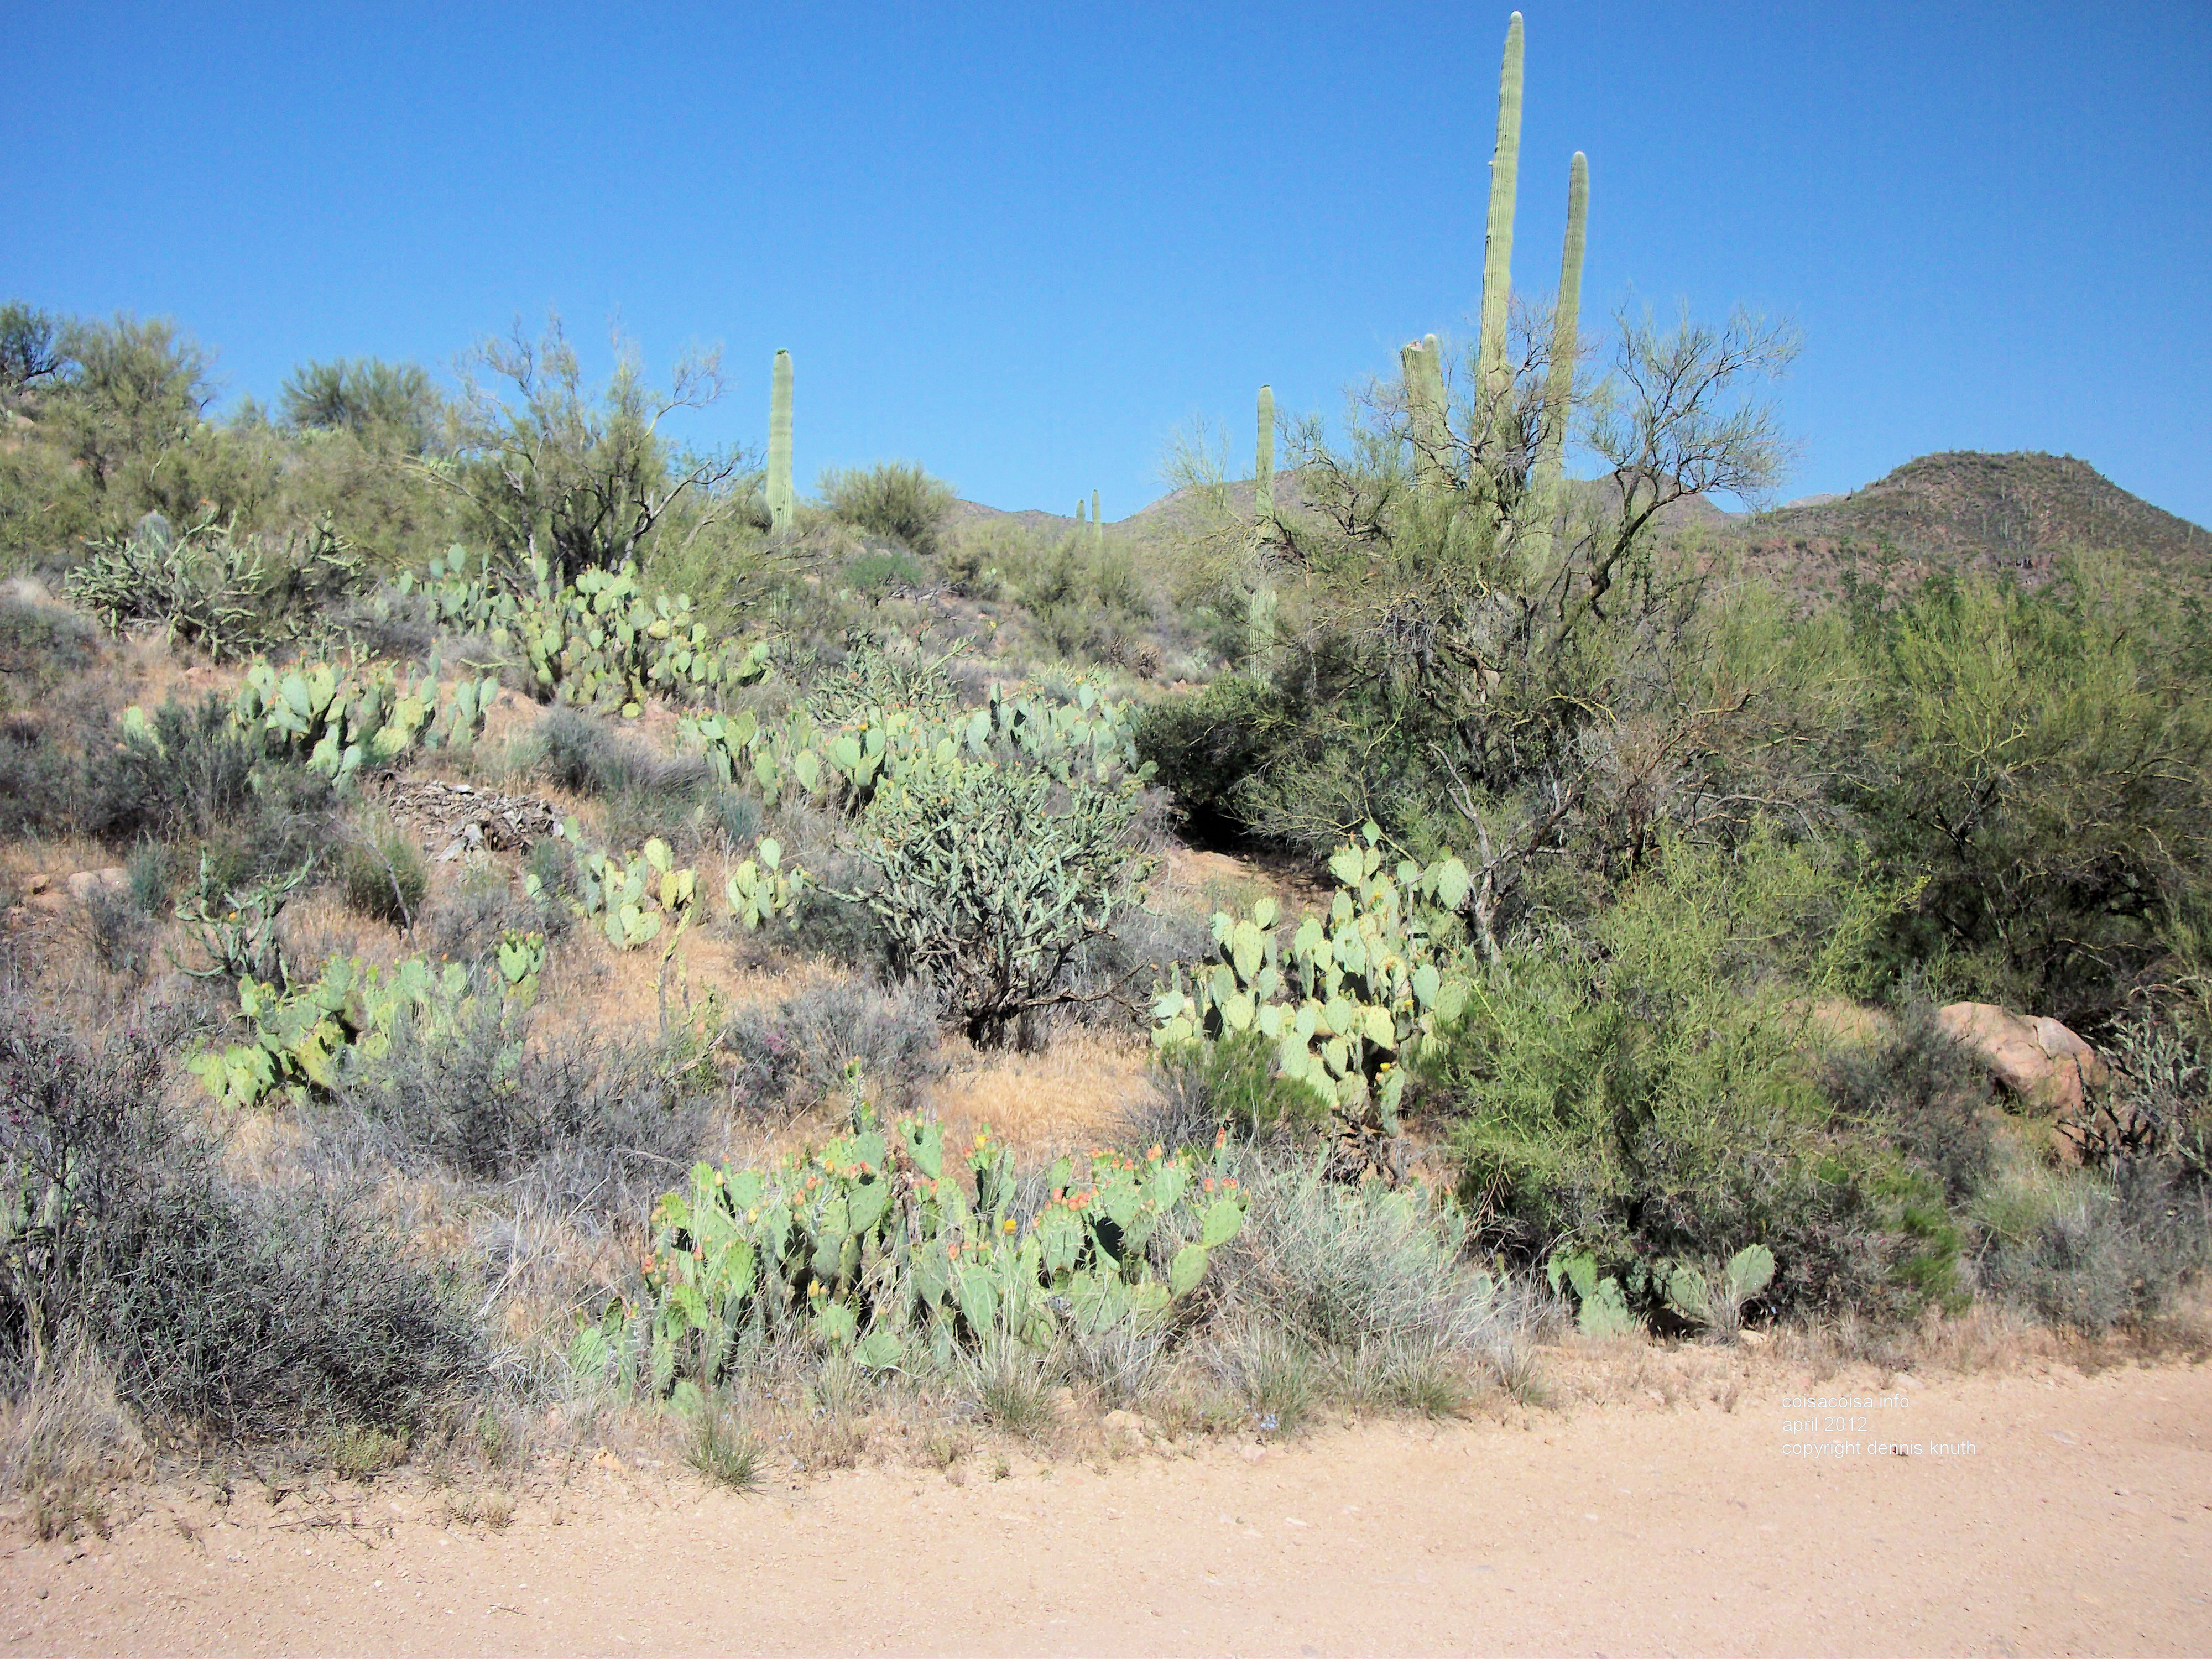 Prickly Pear cacti were everywhere near Payson Arizona